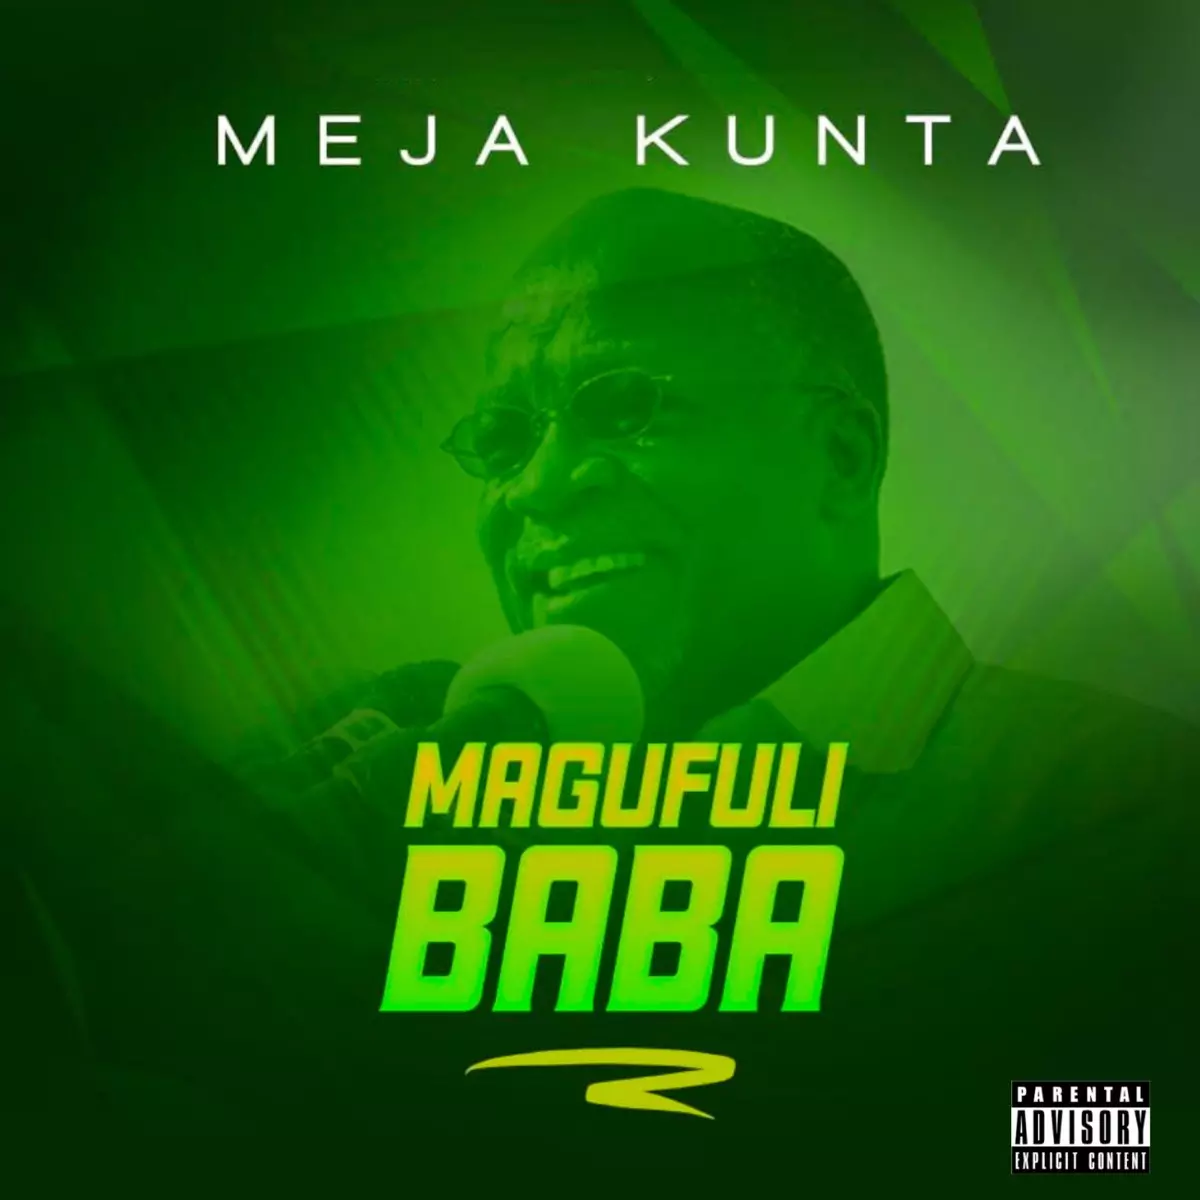 Magufuli Baba - Single by Meja Kunta on Apple Music